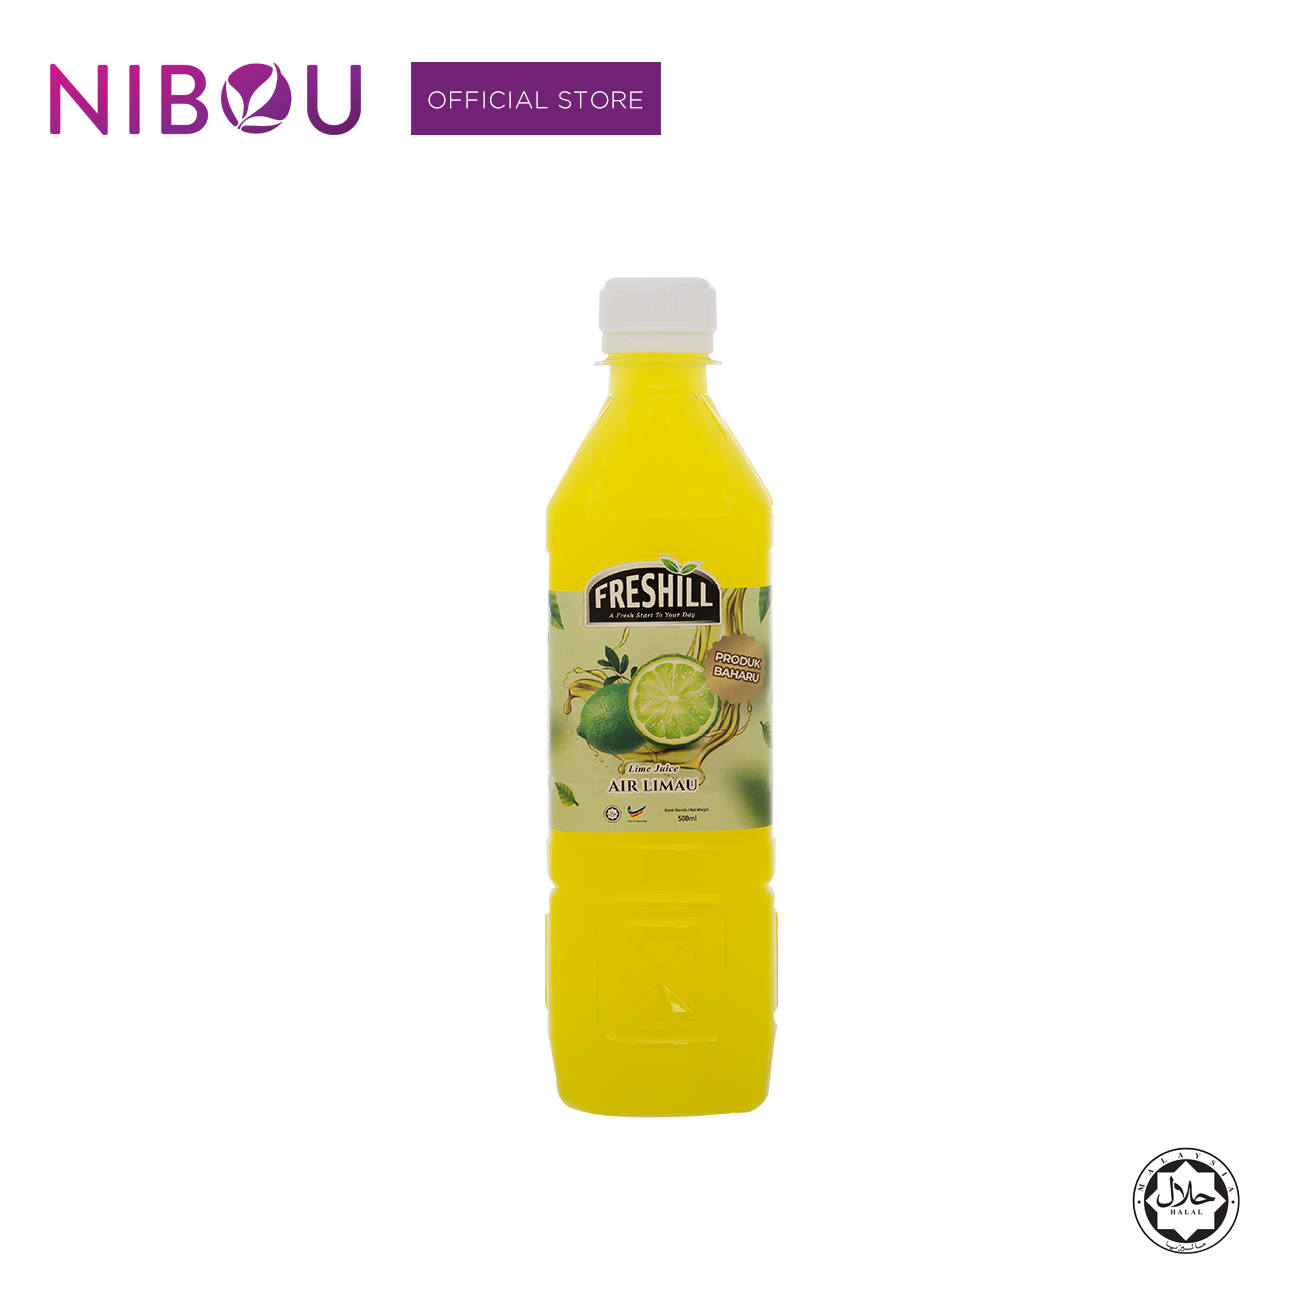 Nibou (NBI) FRESHILL Air Limau (500ml x 24btls)